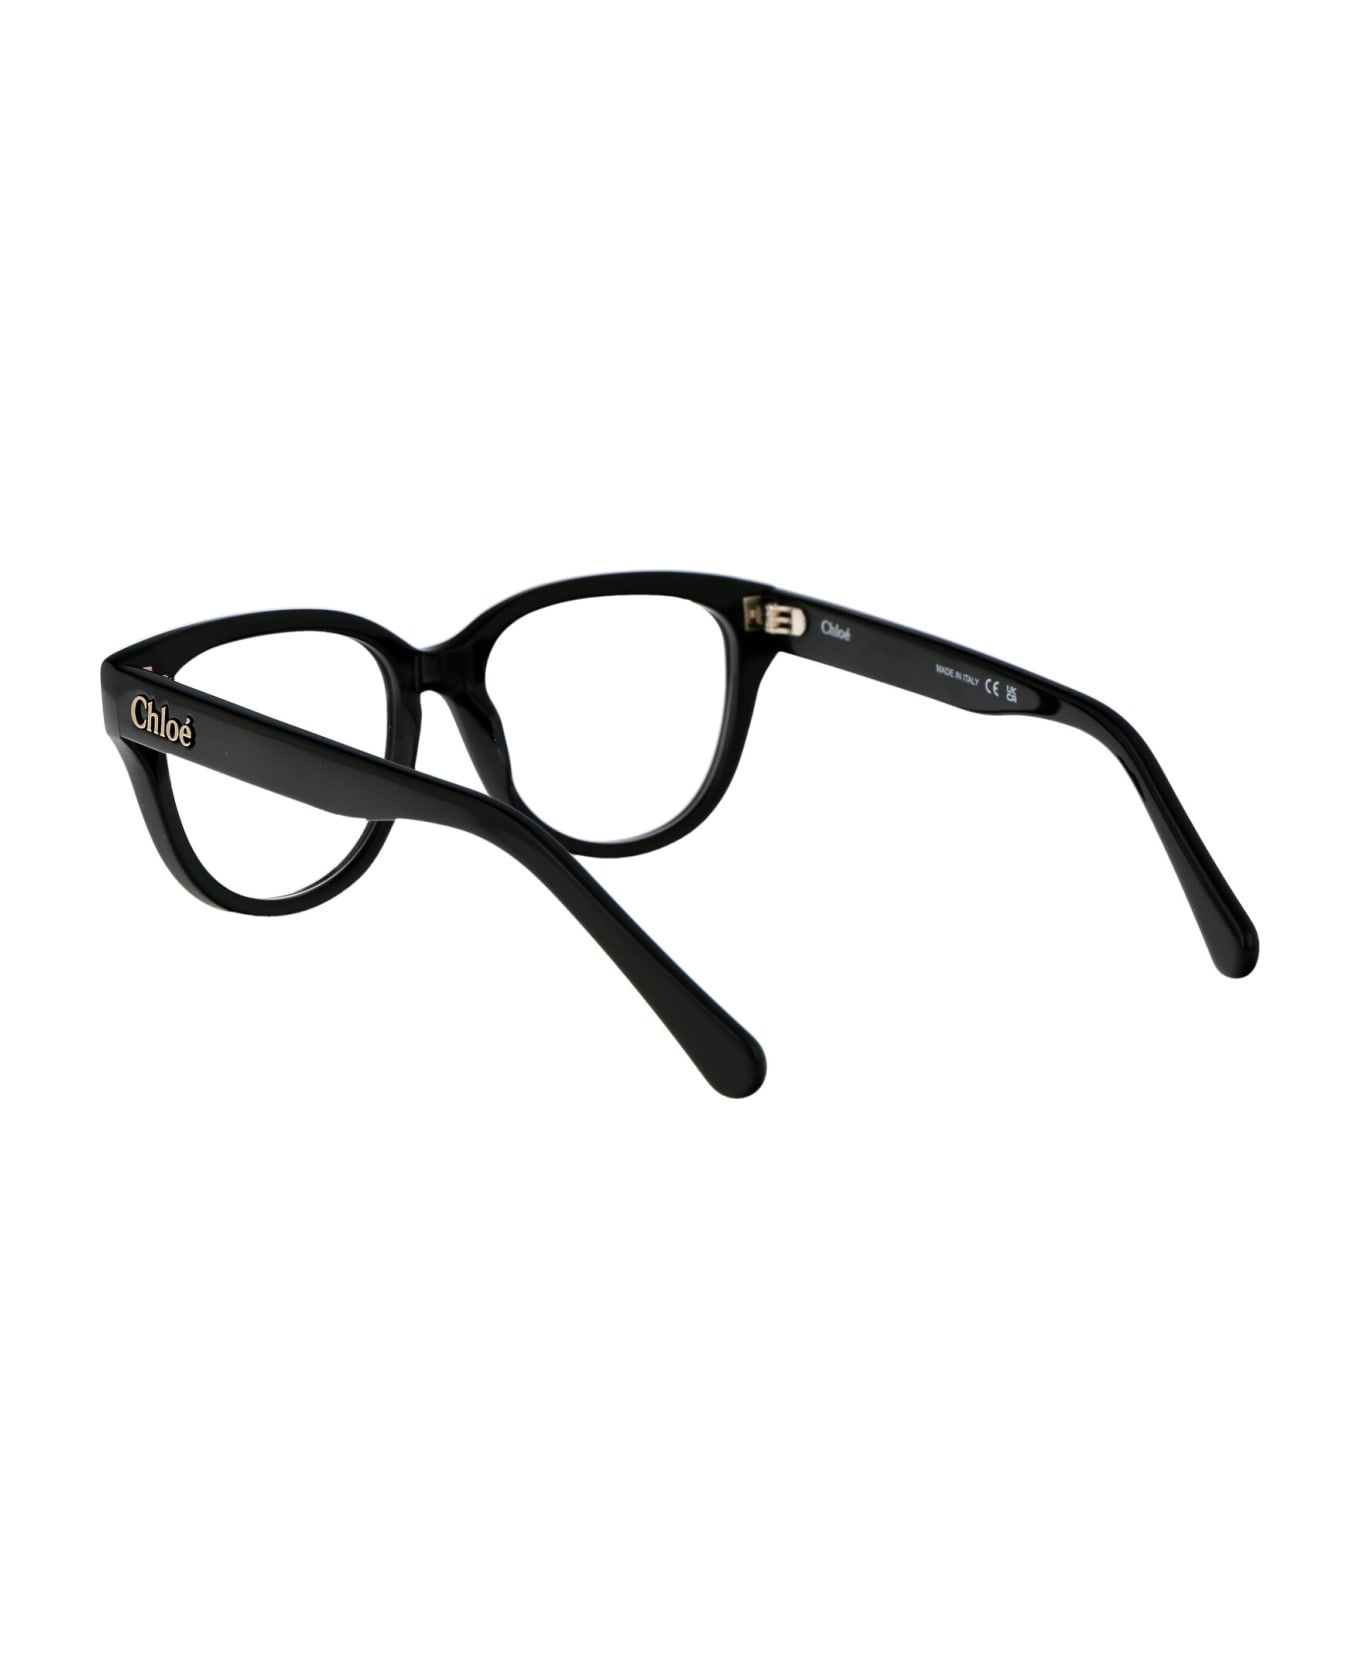 Chloé Eyewear Ch0243o Glasses - 005 BLACK BLACK TRANSPARENT